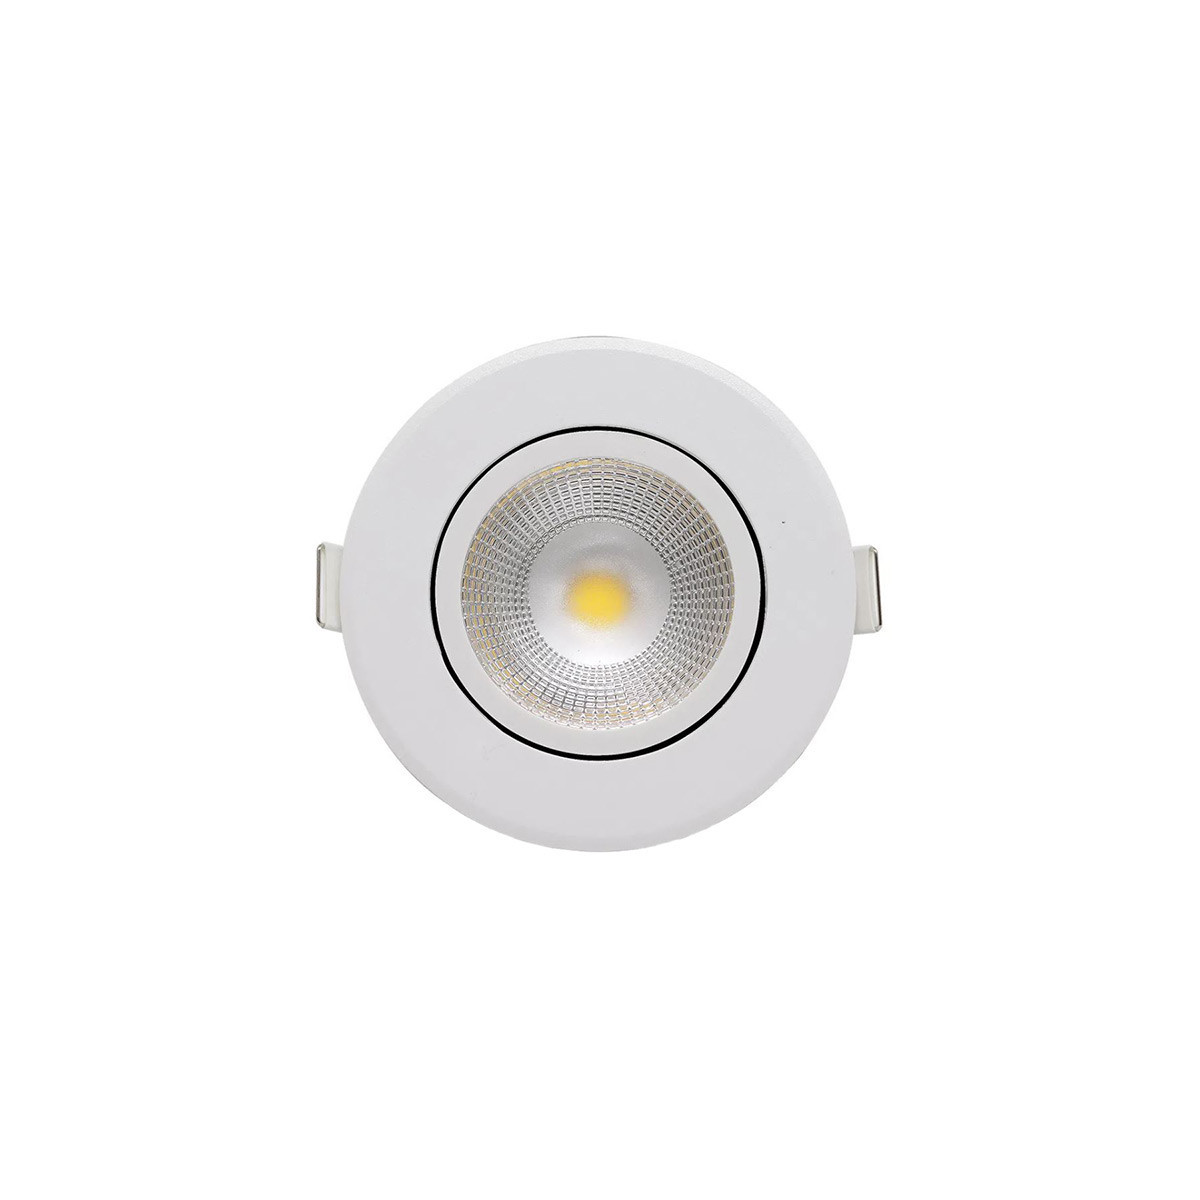 Adjustable SPOT LED downlight 5W